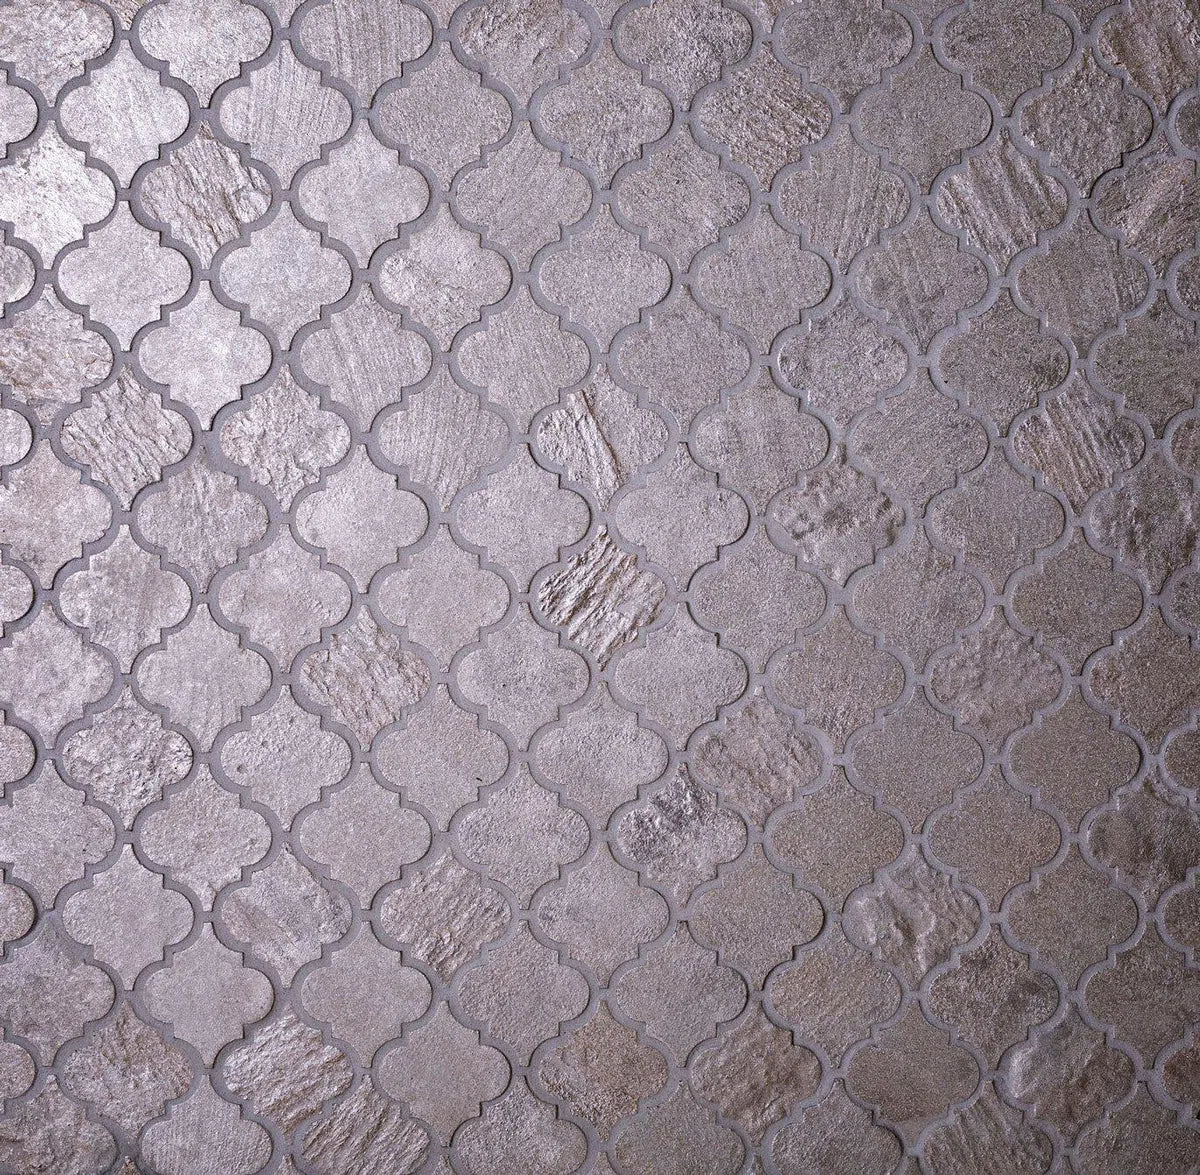 12" x 12" Silver Arabesque Mosaic Tile | Tile Club